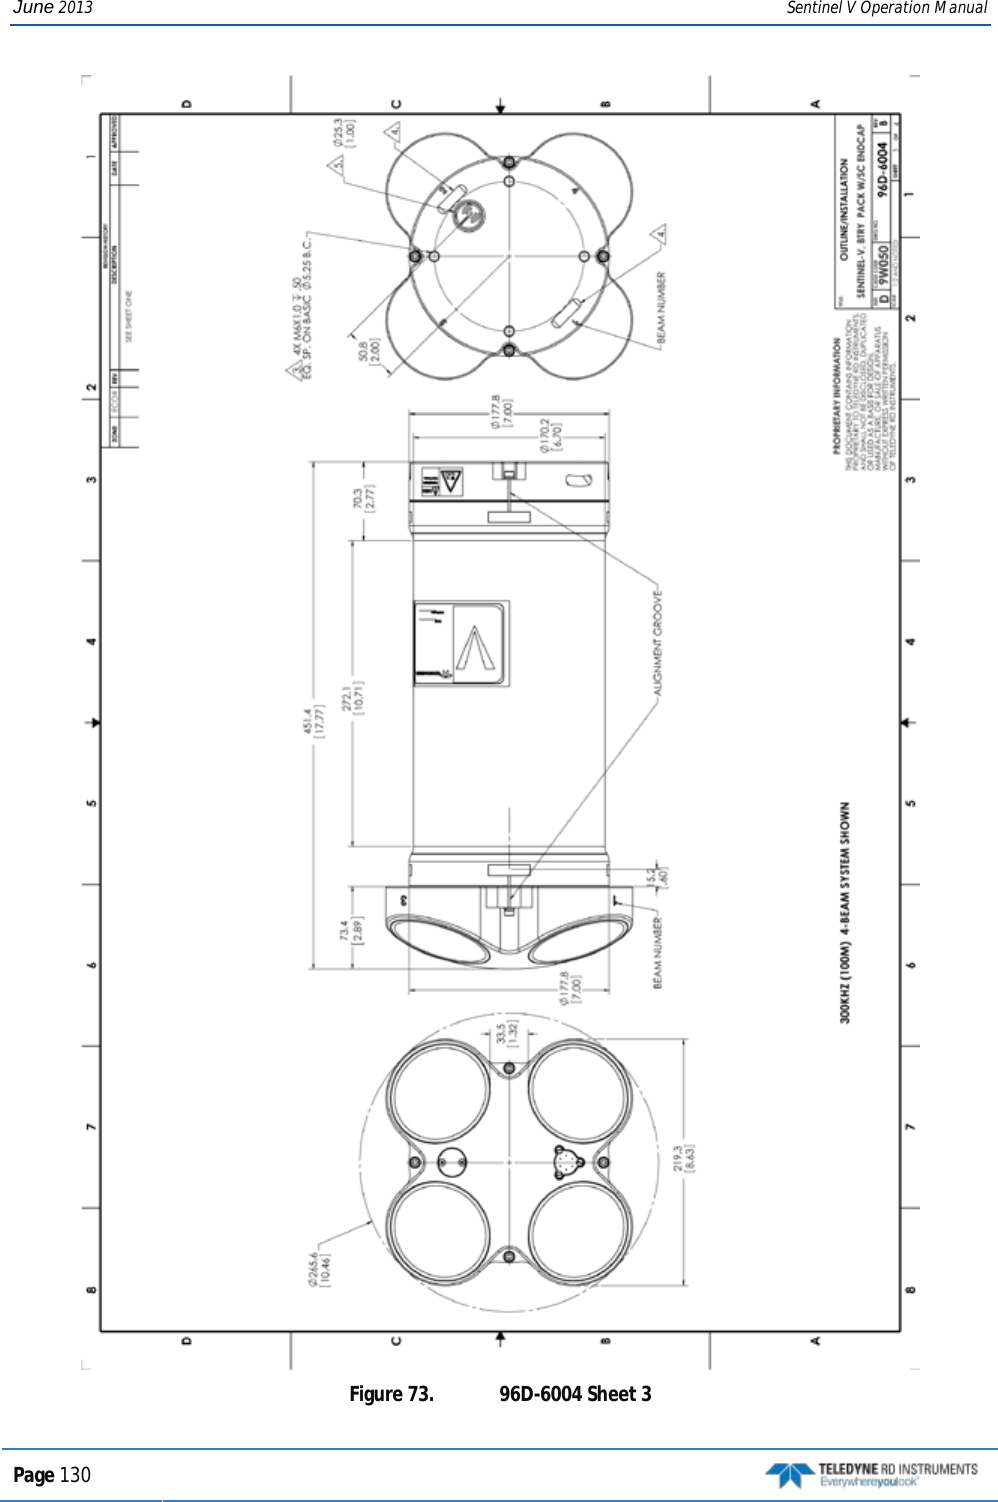 June 2013 Sentinel V Operation Manual  Figure 73.  96D-6004 Sheet 3 Page 130   